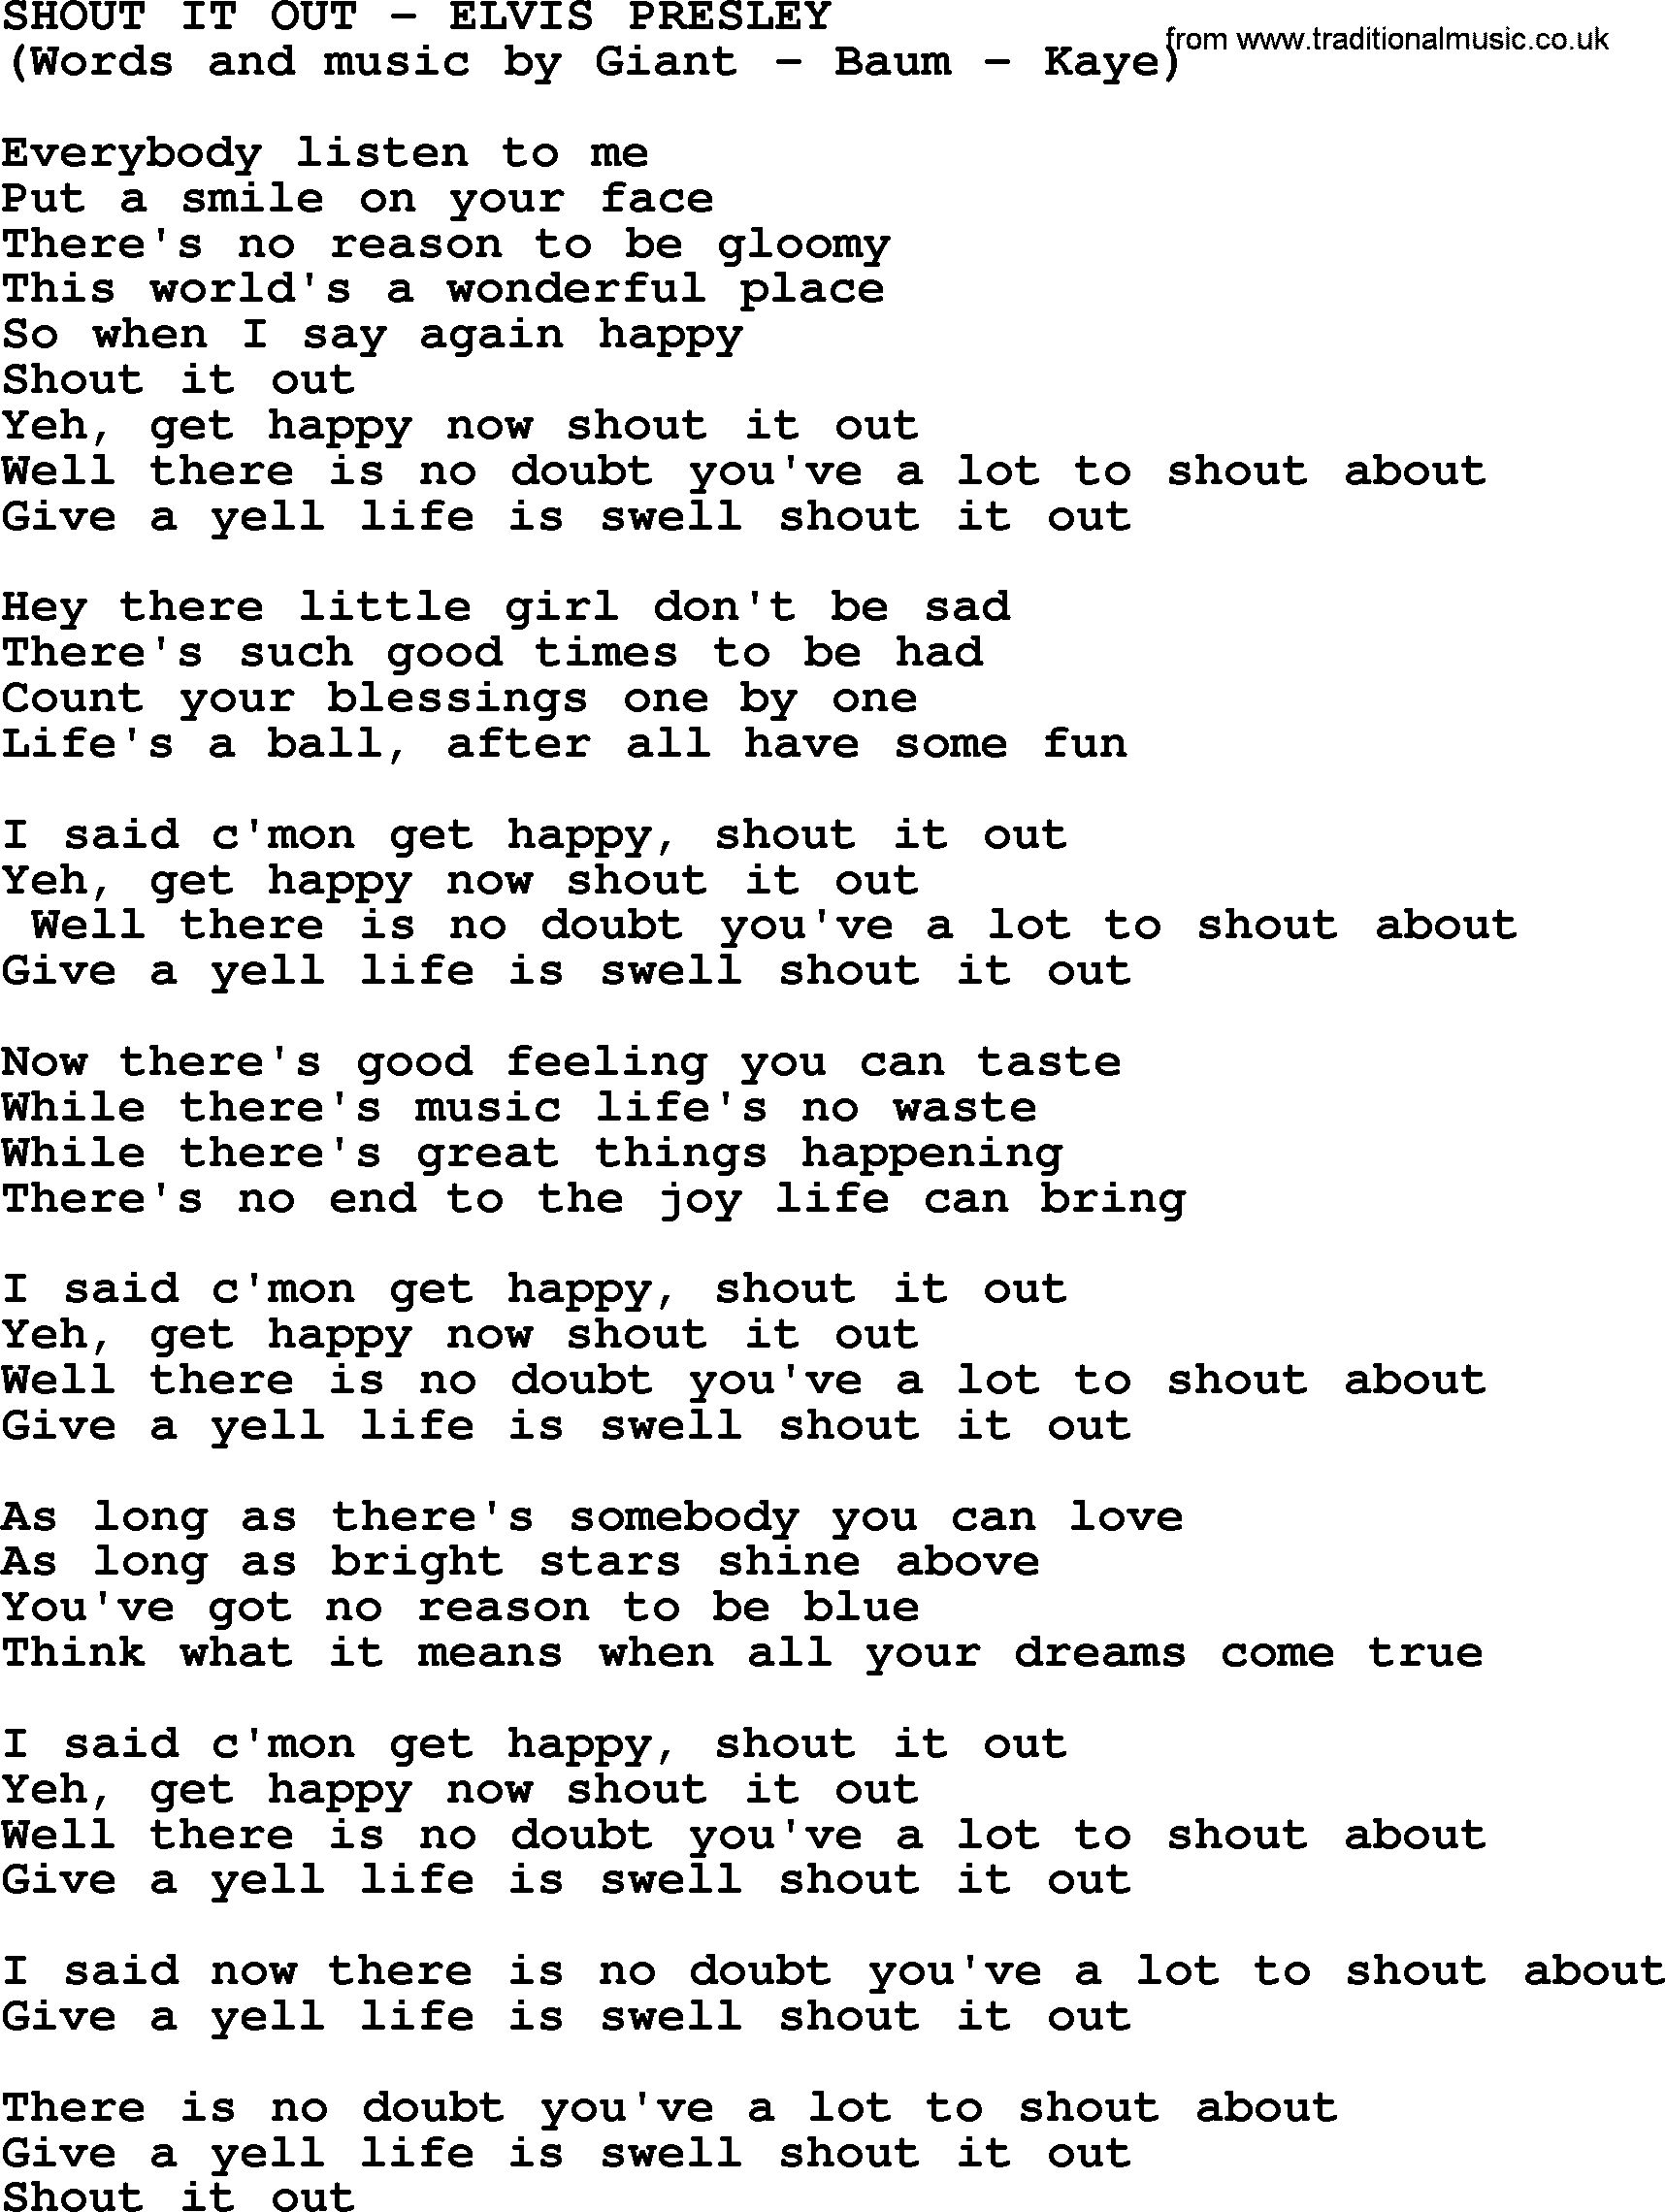 Elvis Presley song: Shout It Out lyrics